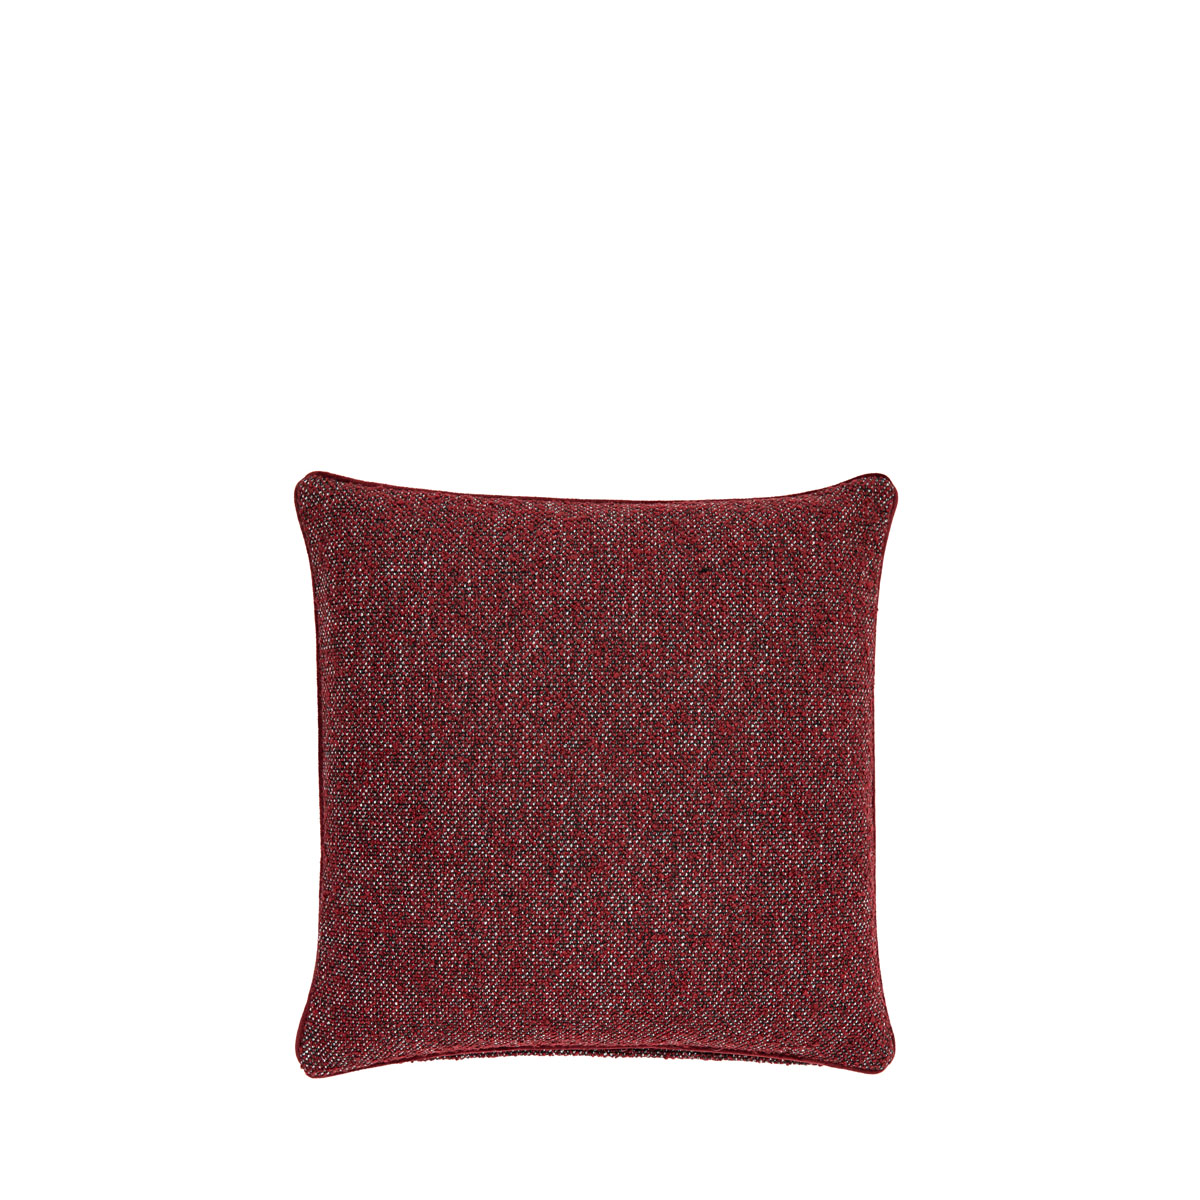 Boucle Natural Cushion Cover Merlot 500x500mm